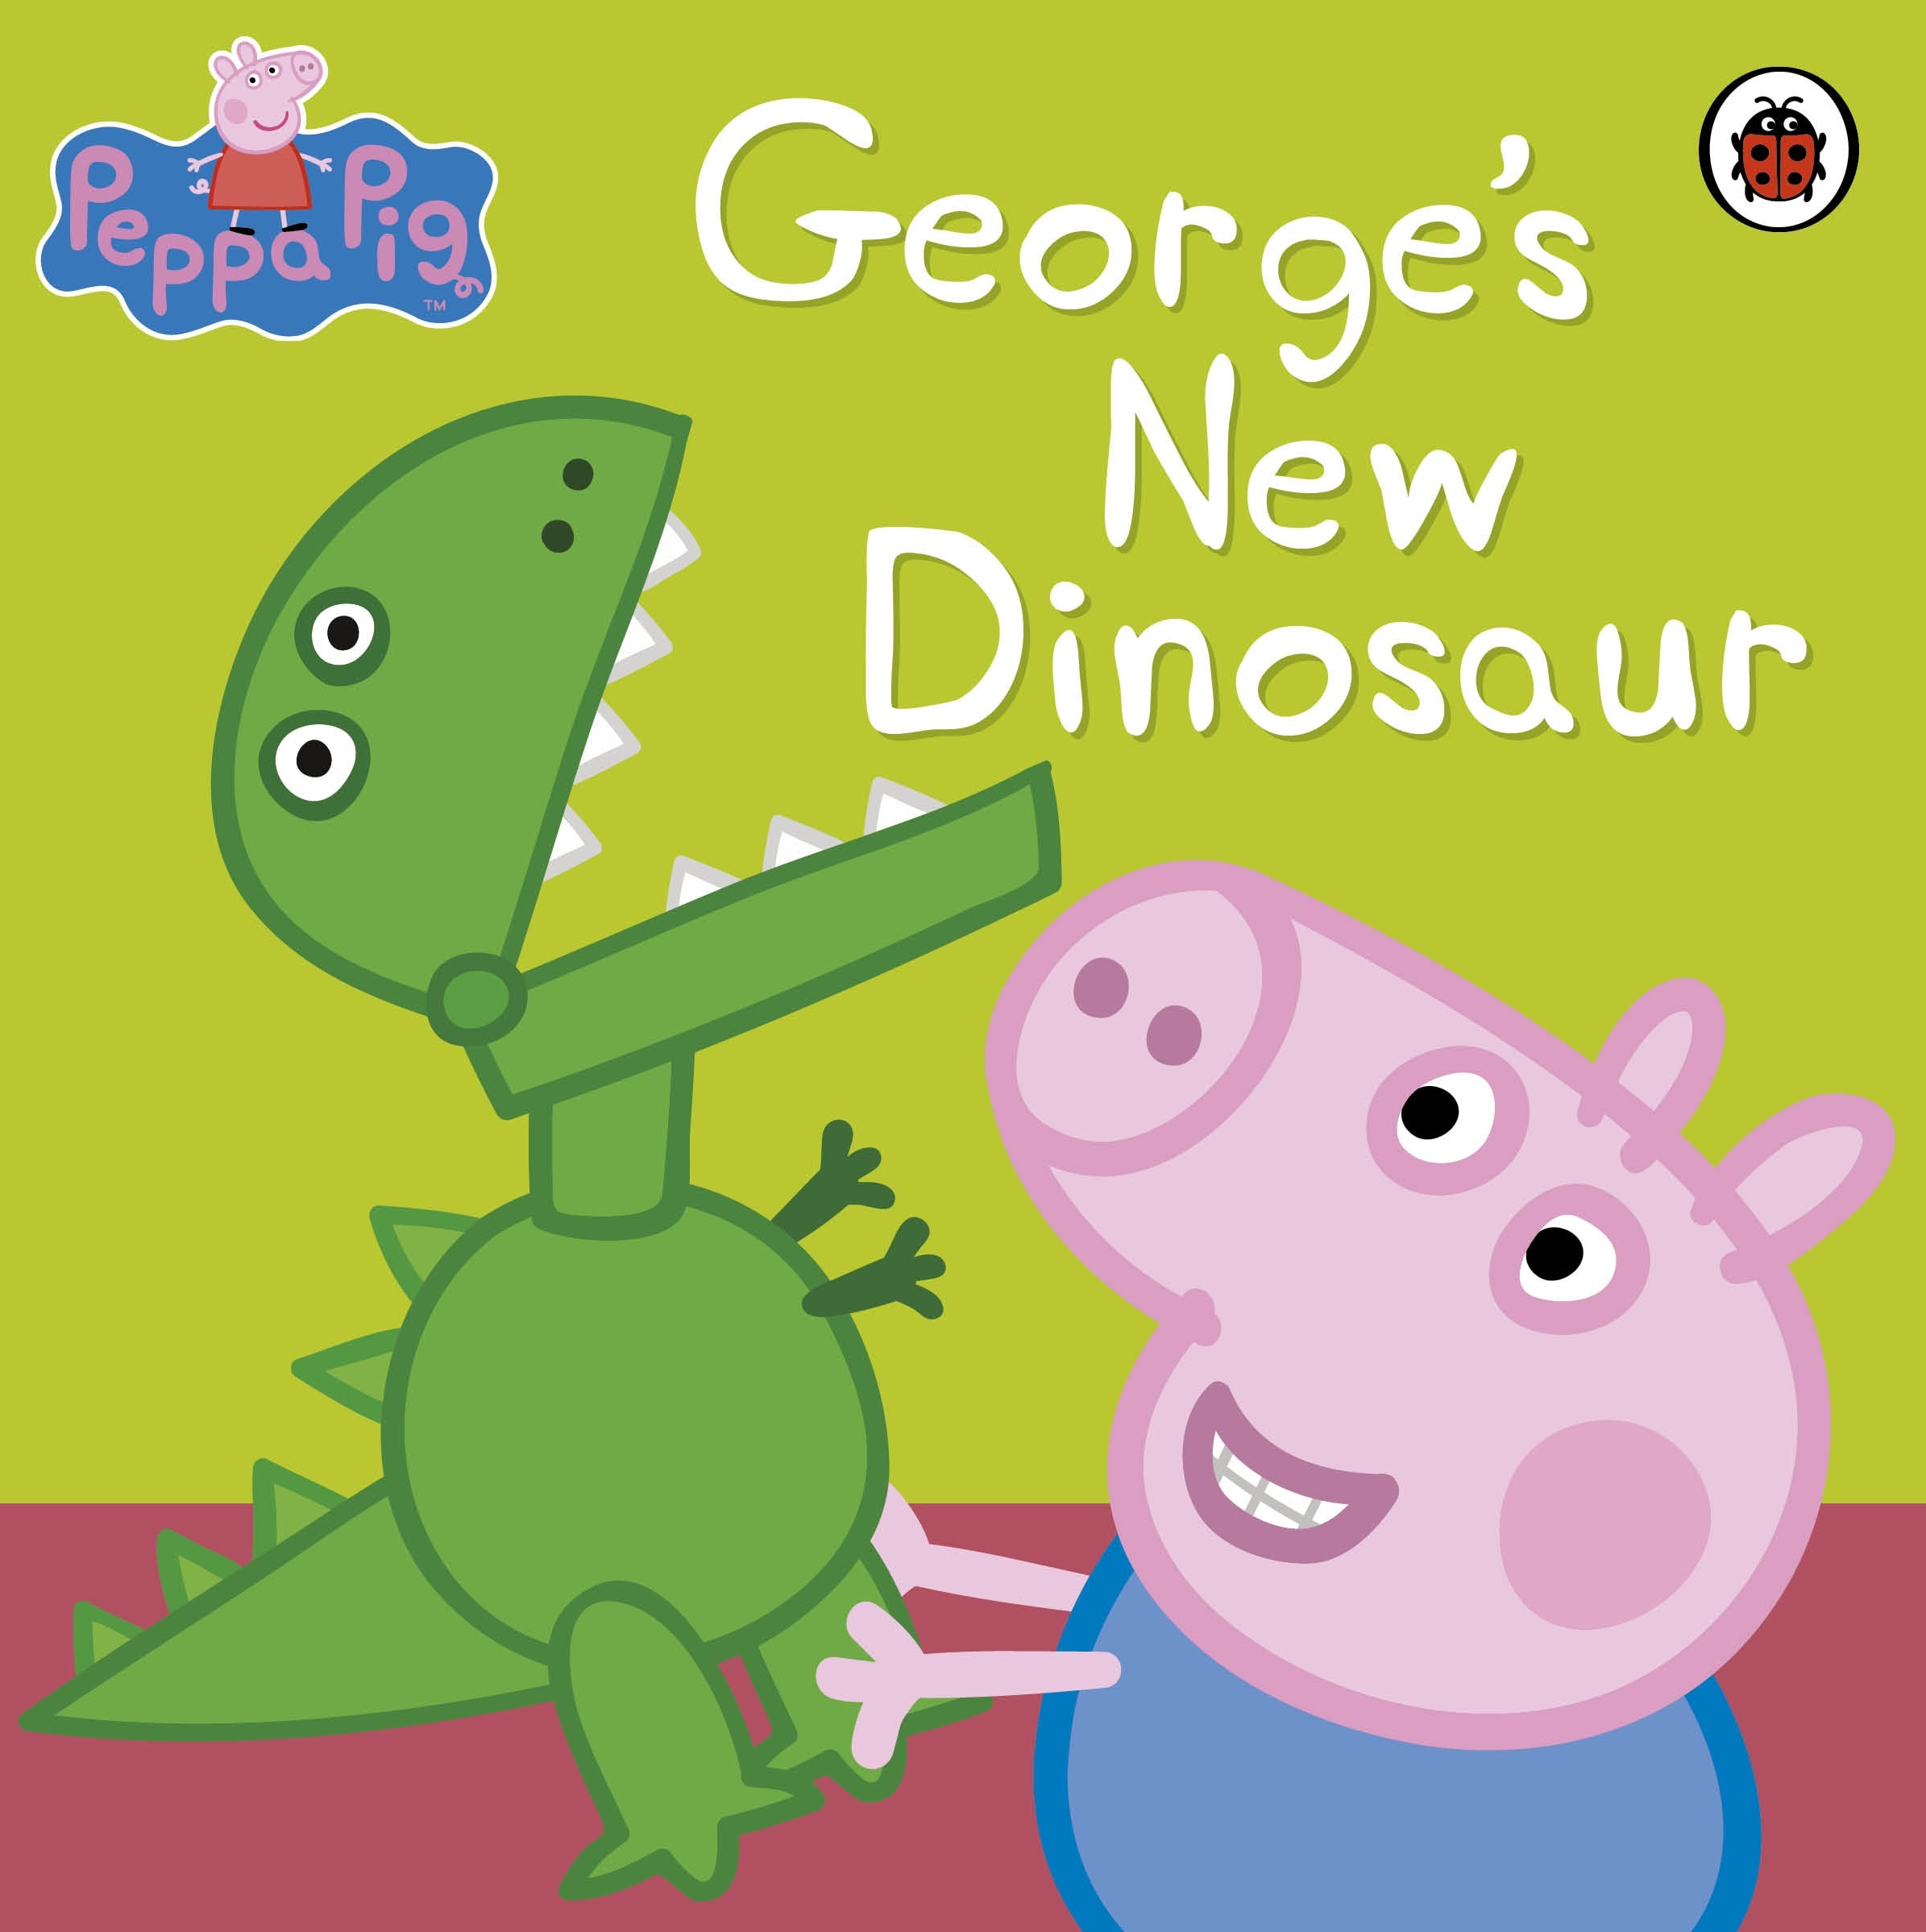 Book “Peppa Pig: George's New Dinosaur” by Peppa Pig — January 2, 2014